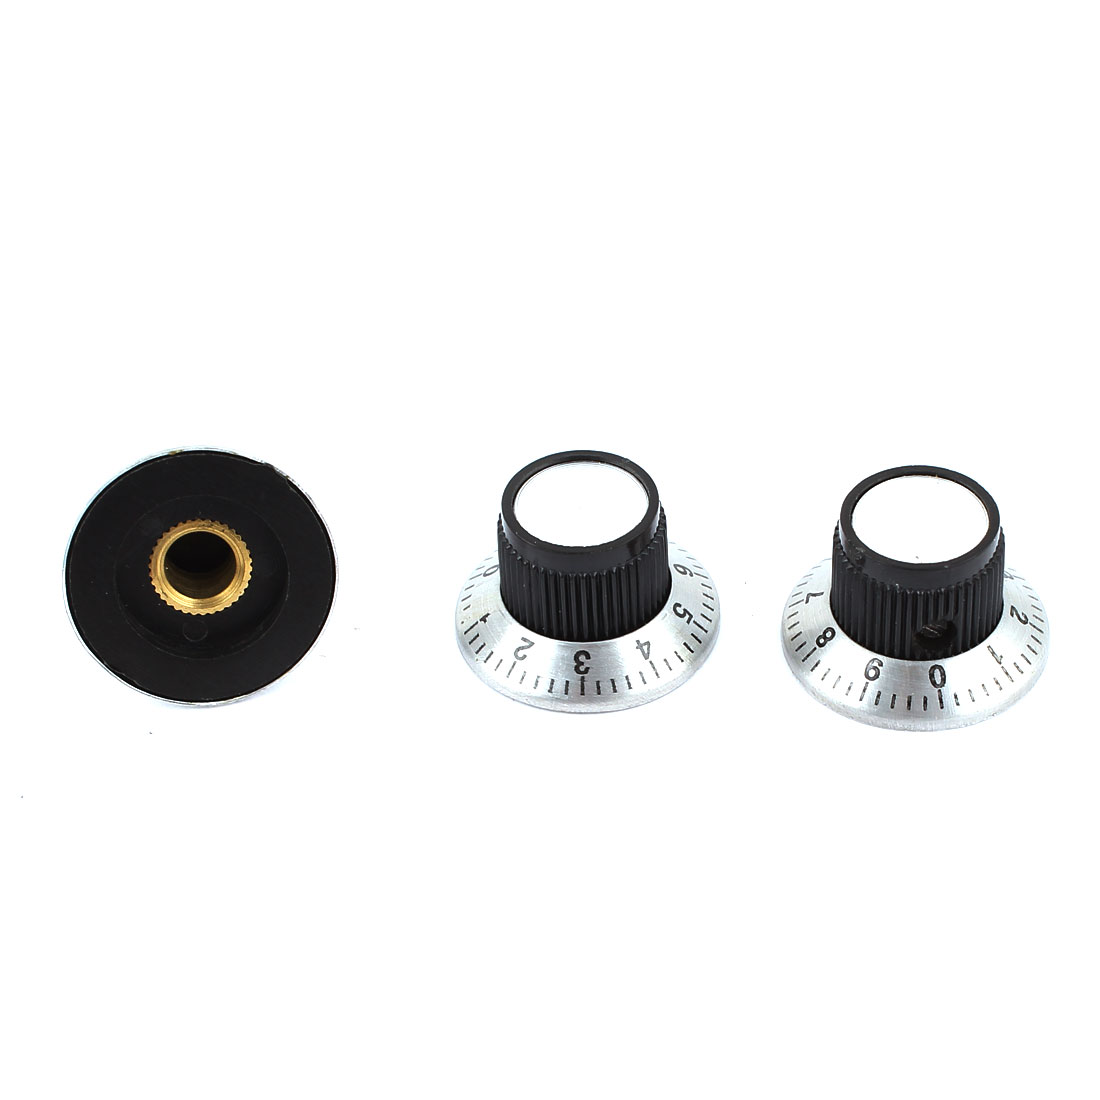 Unique Bargains 3pcs Silver Tone 0-9 Graduated Dial Switch Potentiometer Rotary Knob